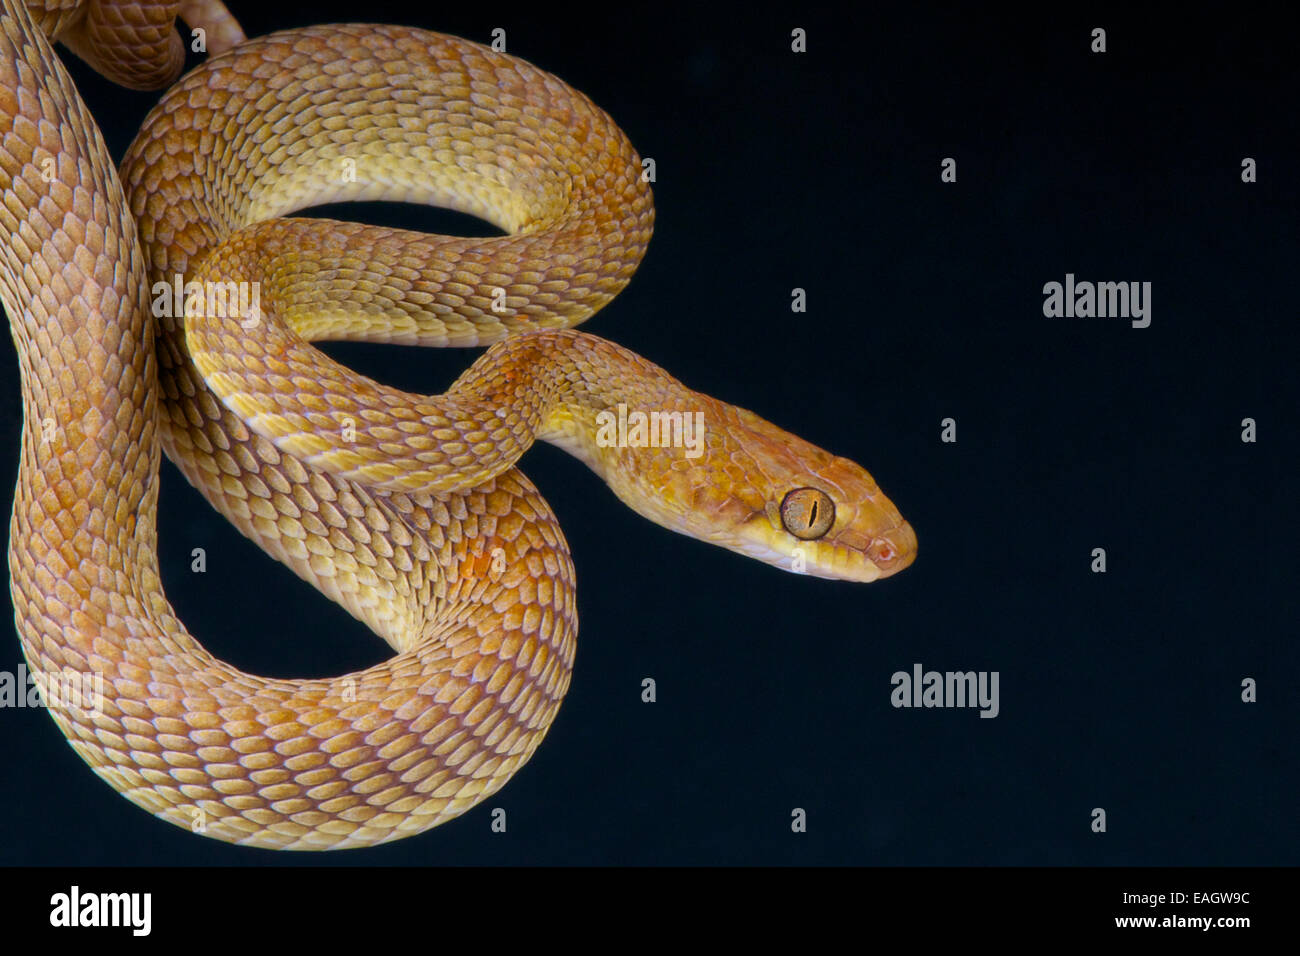 Arabian cat snake / Telescopus dhara Stock Photo